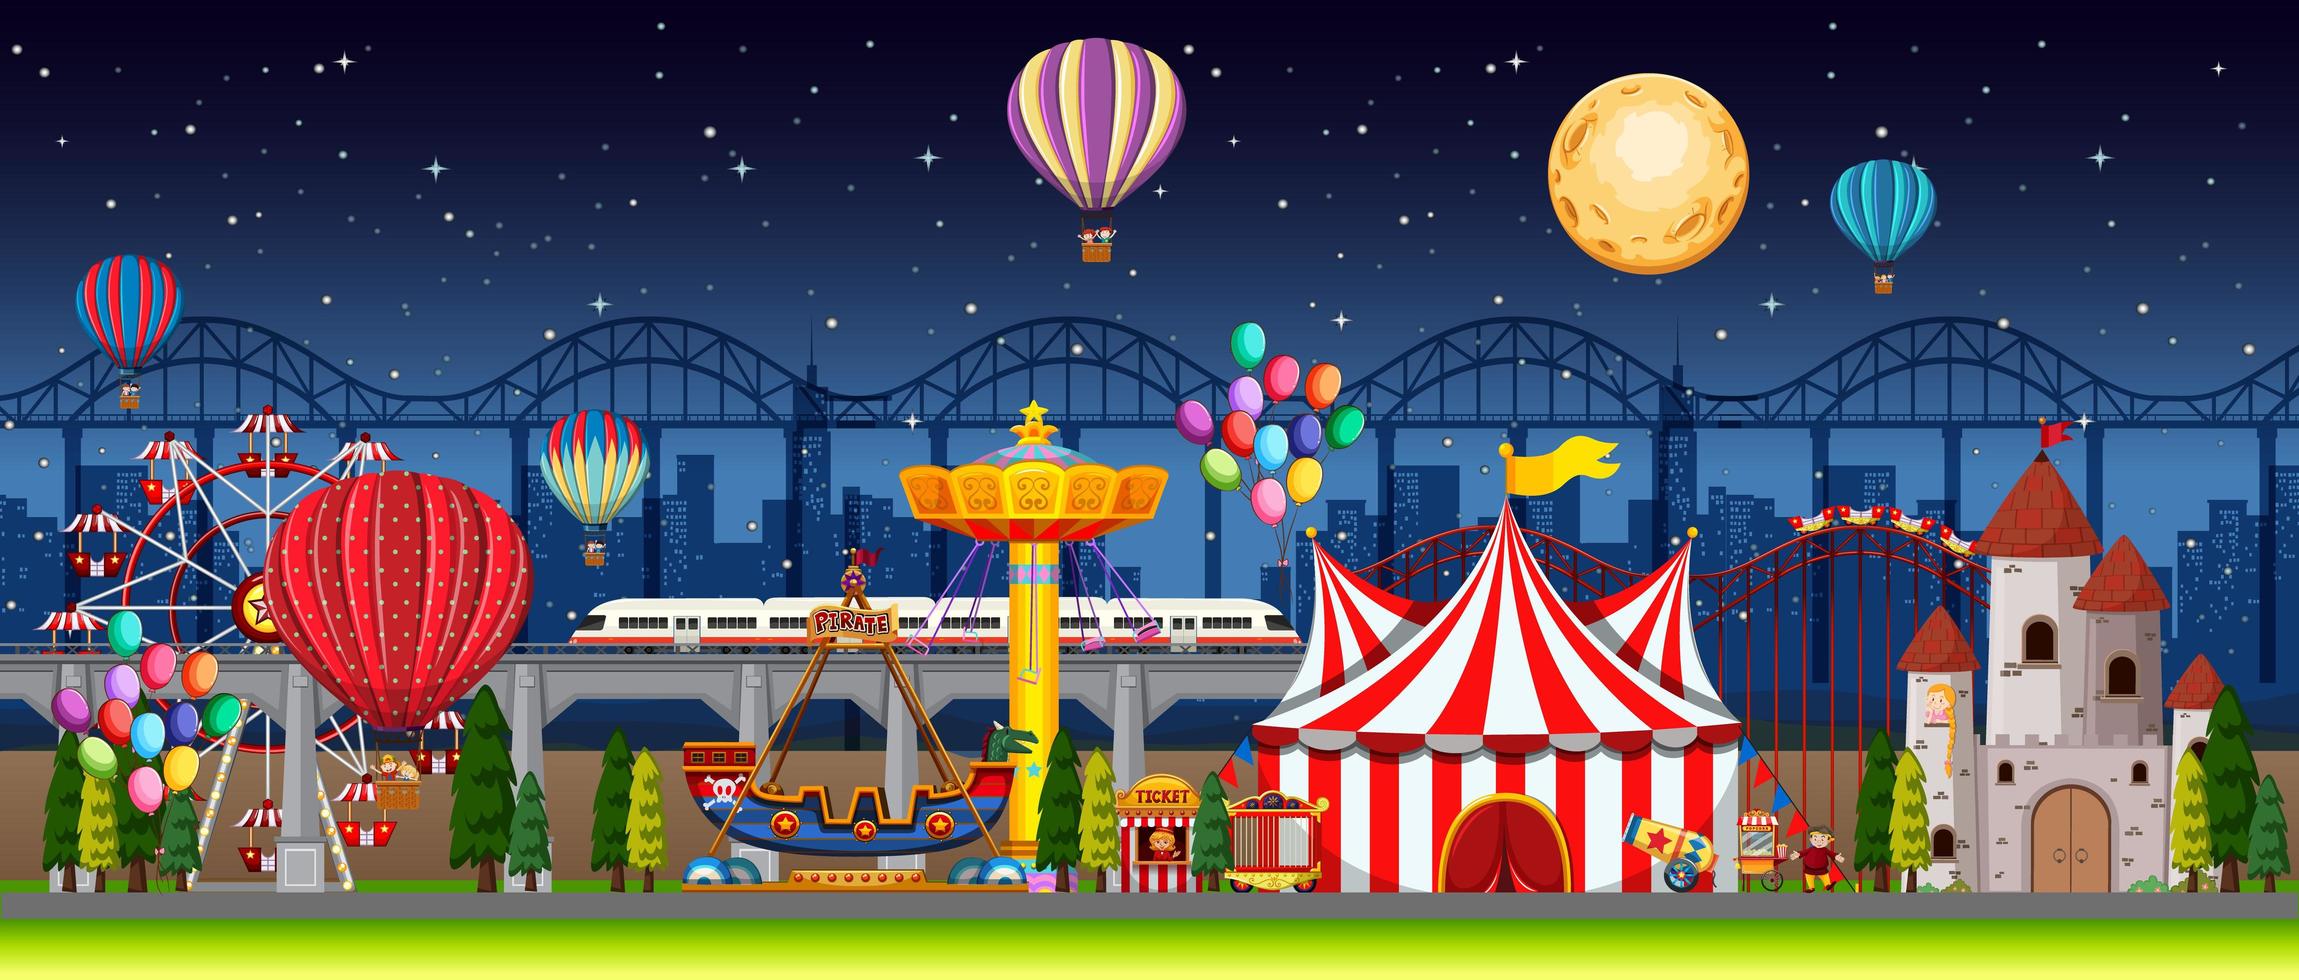 Amusement park festival night scene vector